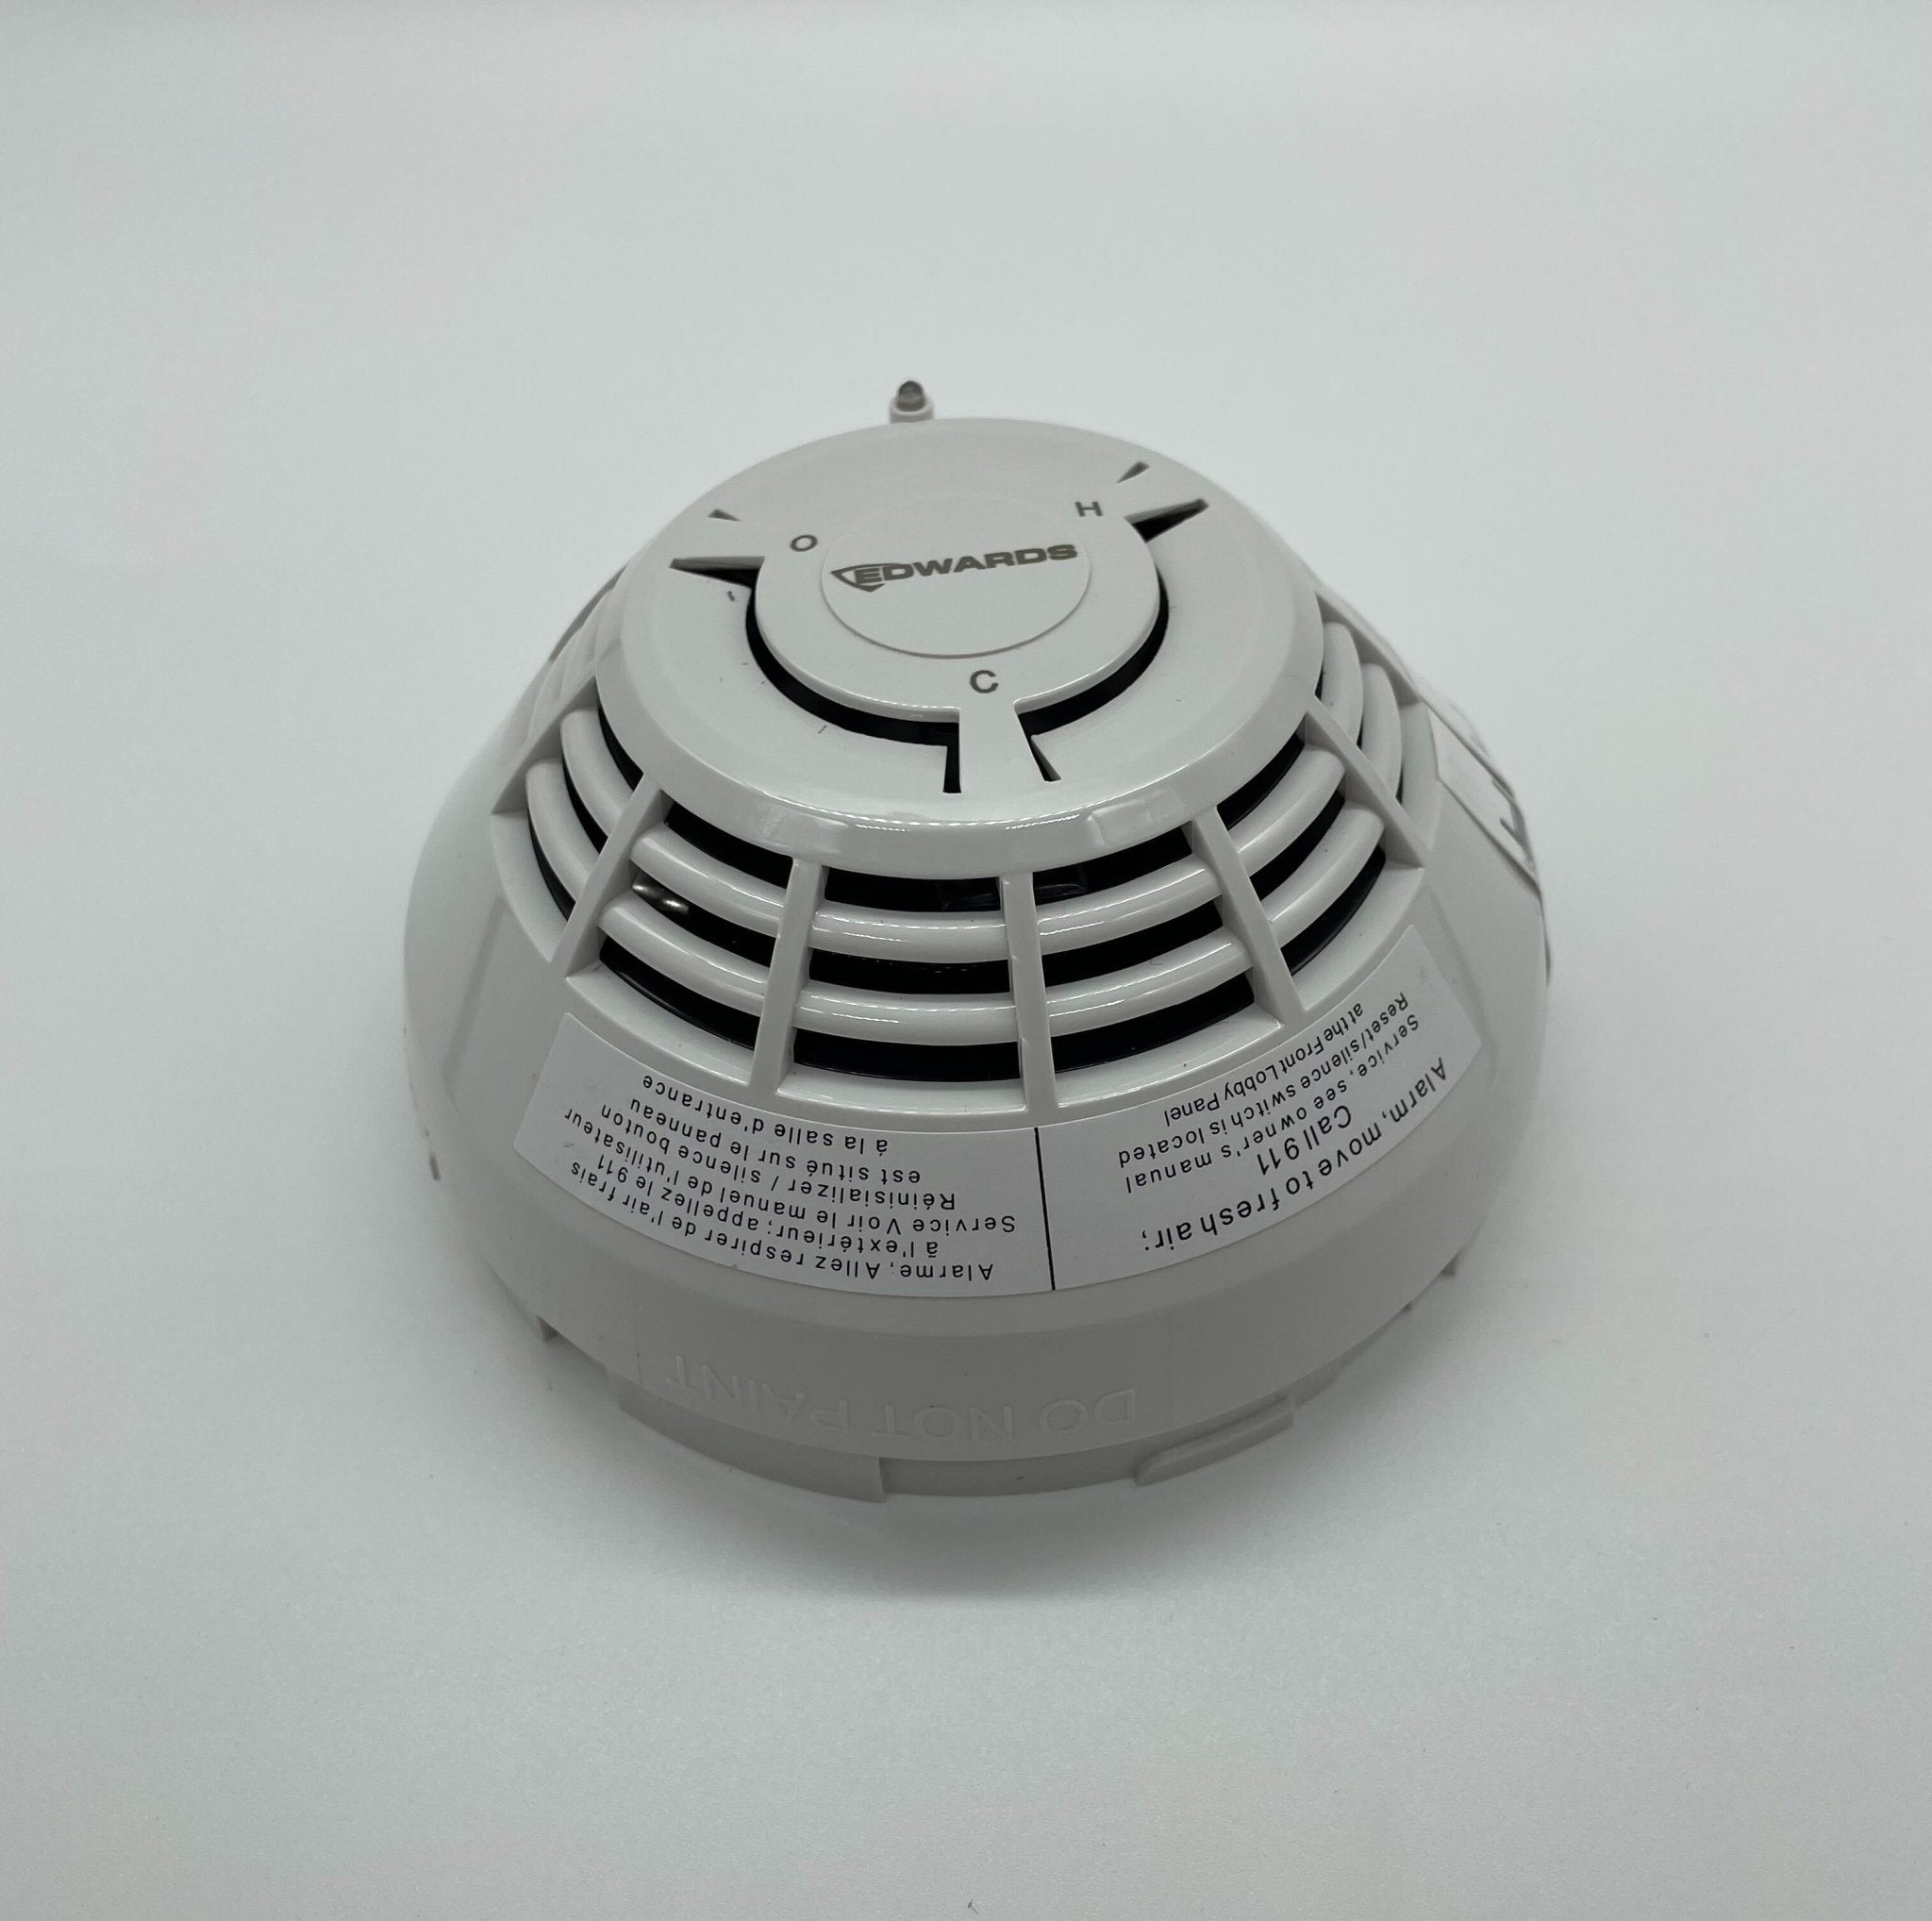 Edwards SIGA-OSHCD - The Fire Alarm Supplier